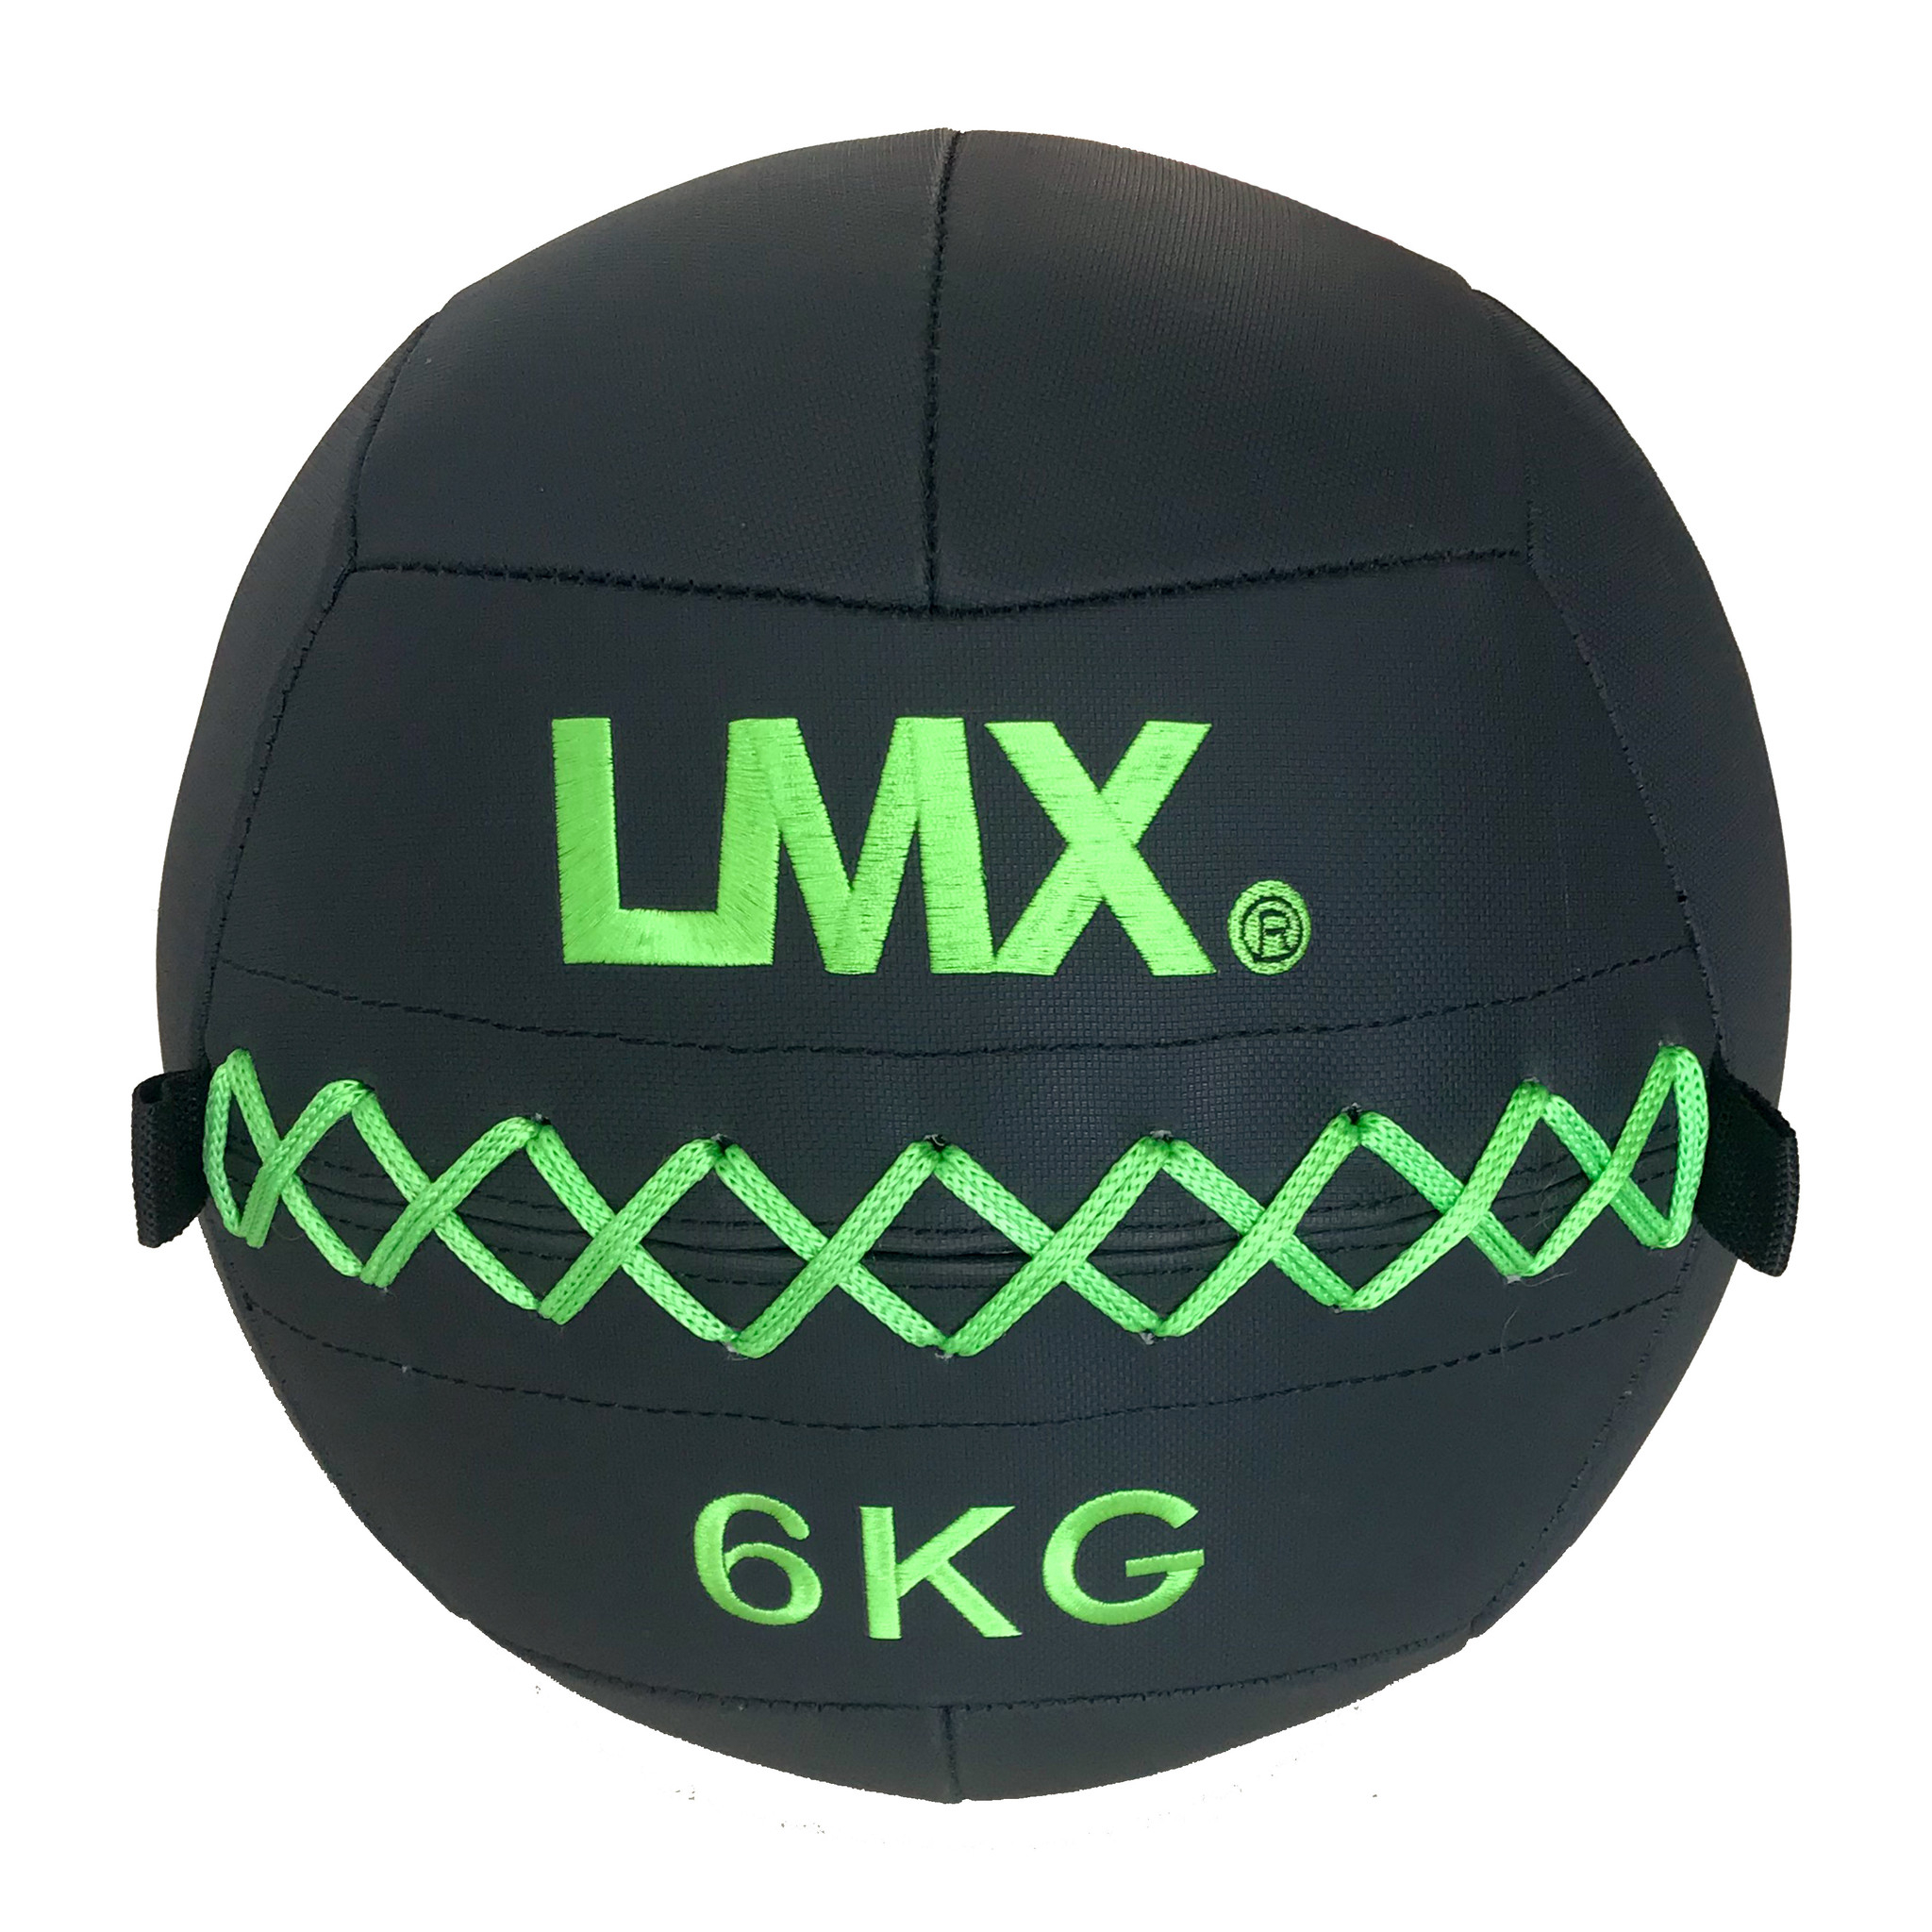 Lifemaxx Wall Ball Premium - 6 kg